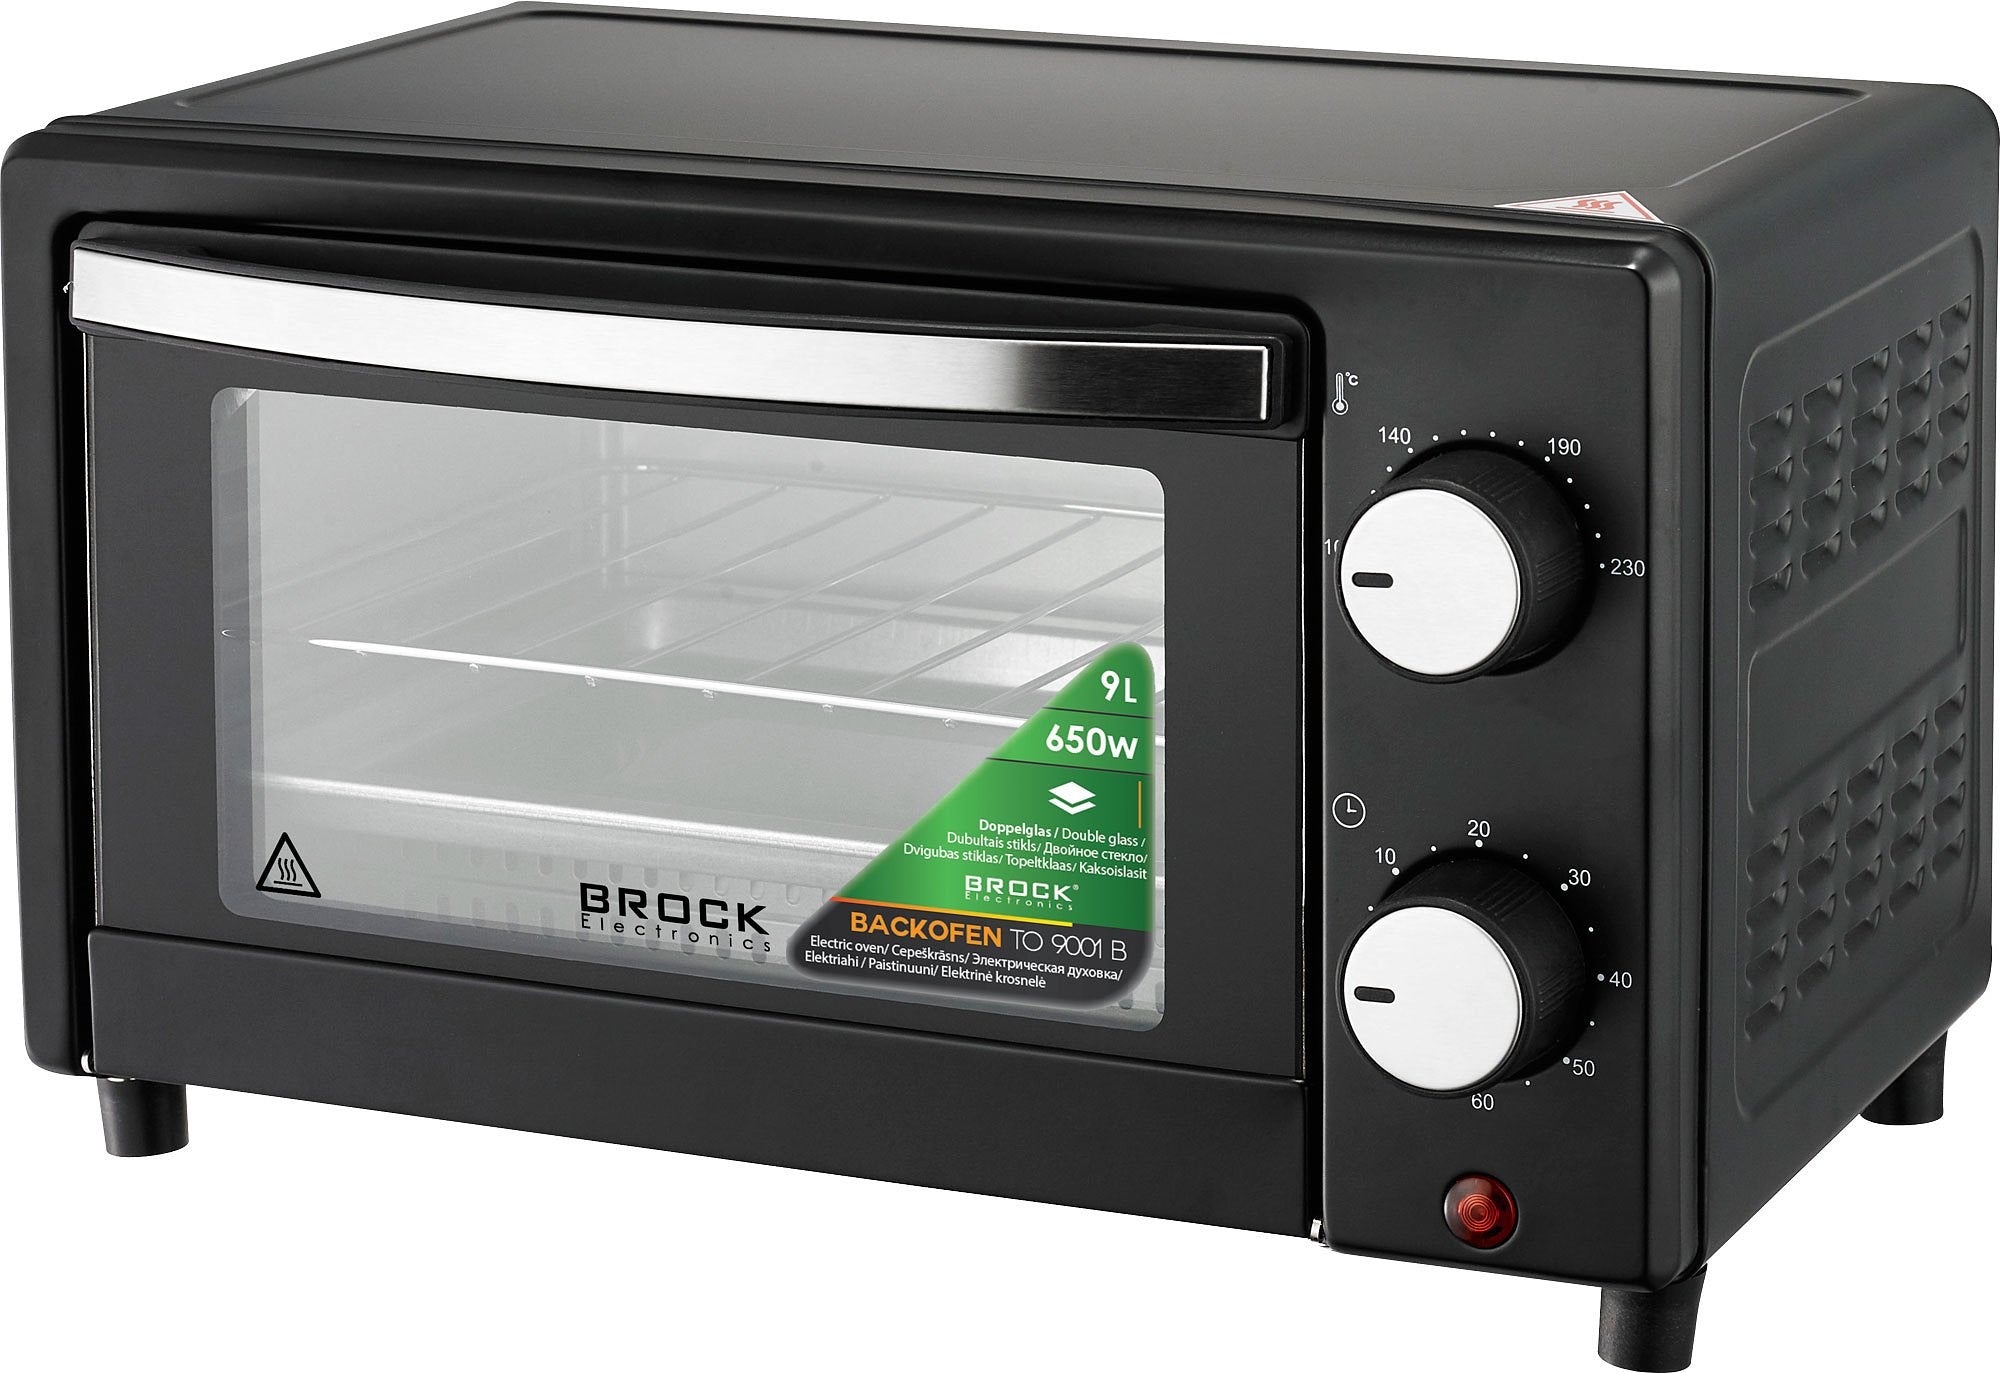 BROCK Electronics Mini Oven TO 9001 B (9 liter, 650W, Zwart)